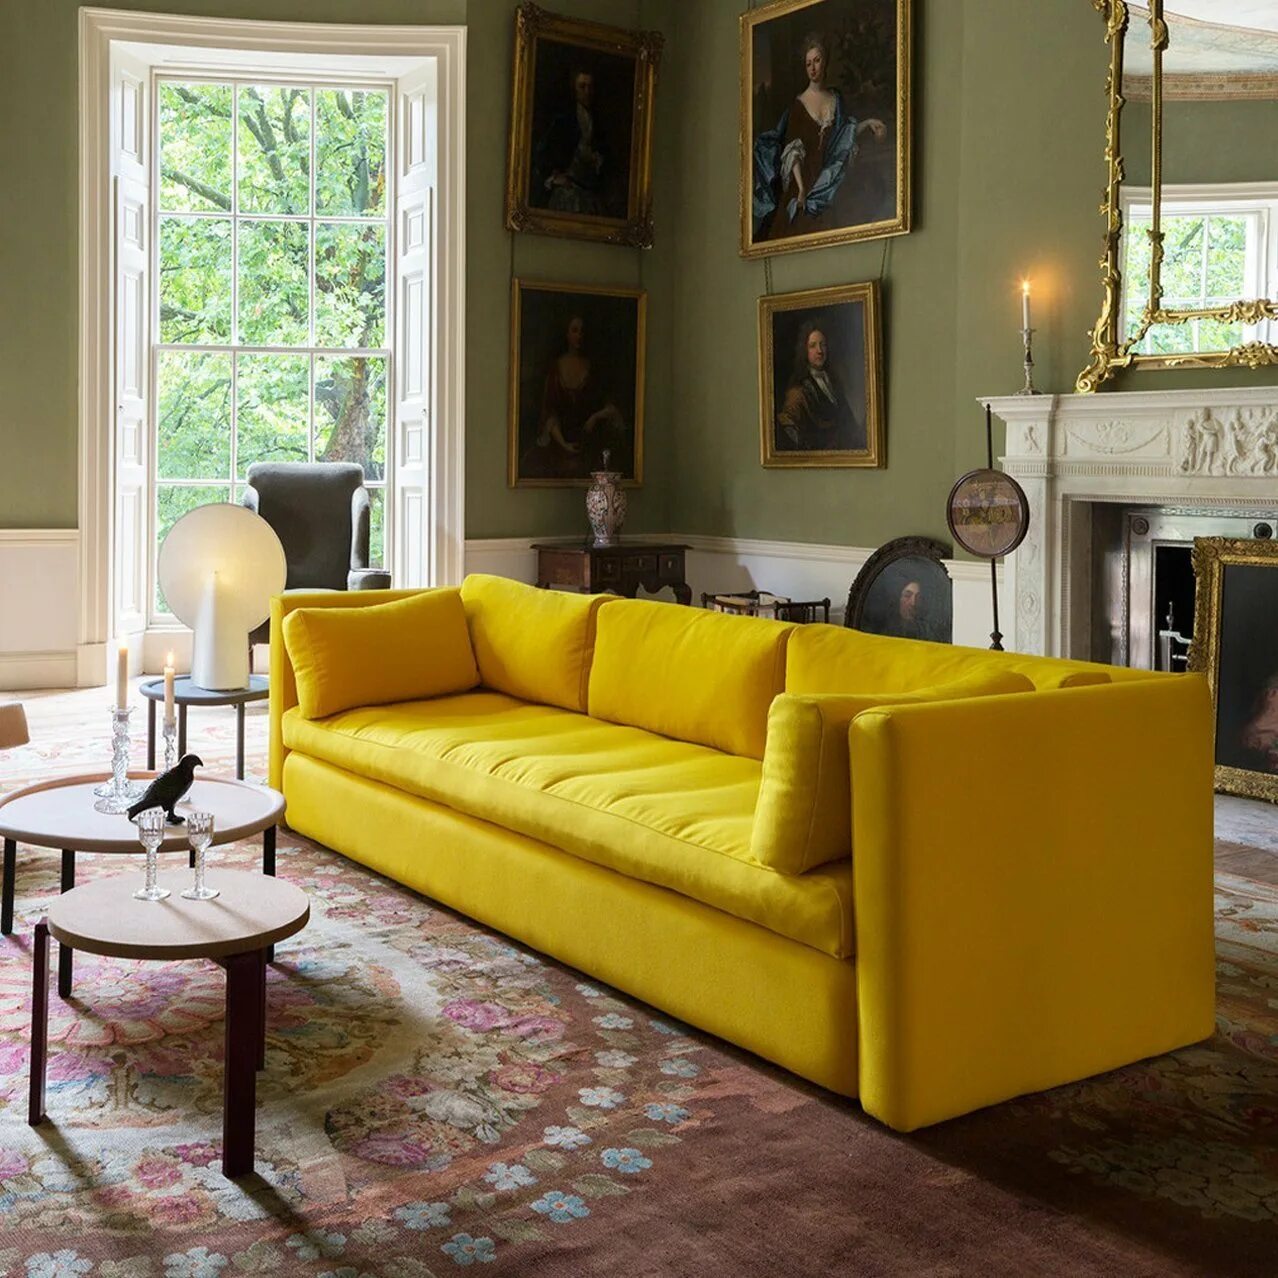 Горчичный в интерьере. Желтый диван в интерьере. Горчичный диван в интерьере. Гостиная с желтым диваном. Жёлтый диван в интерьете.